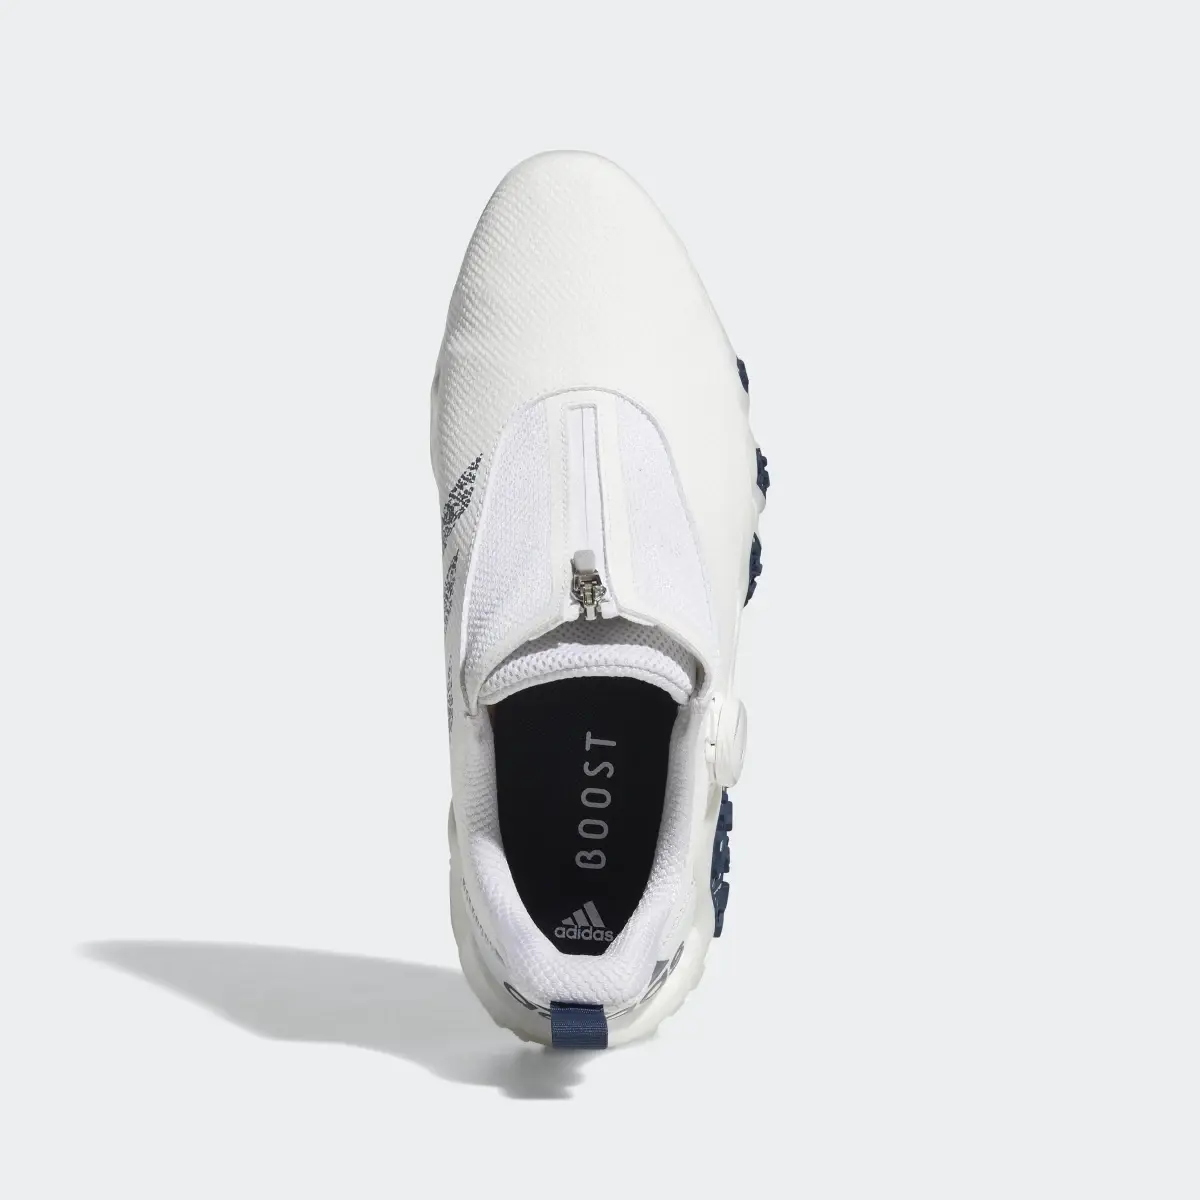 Adidas Codechaos 22 BOA Spikeless Golf Shoes. 3